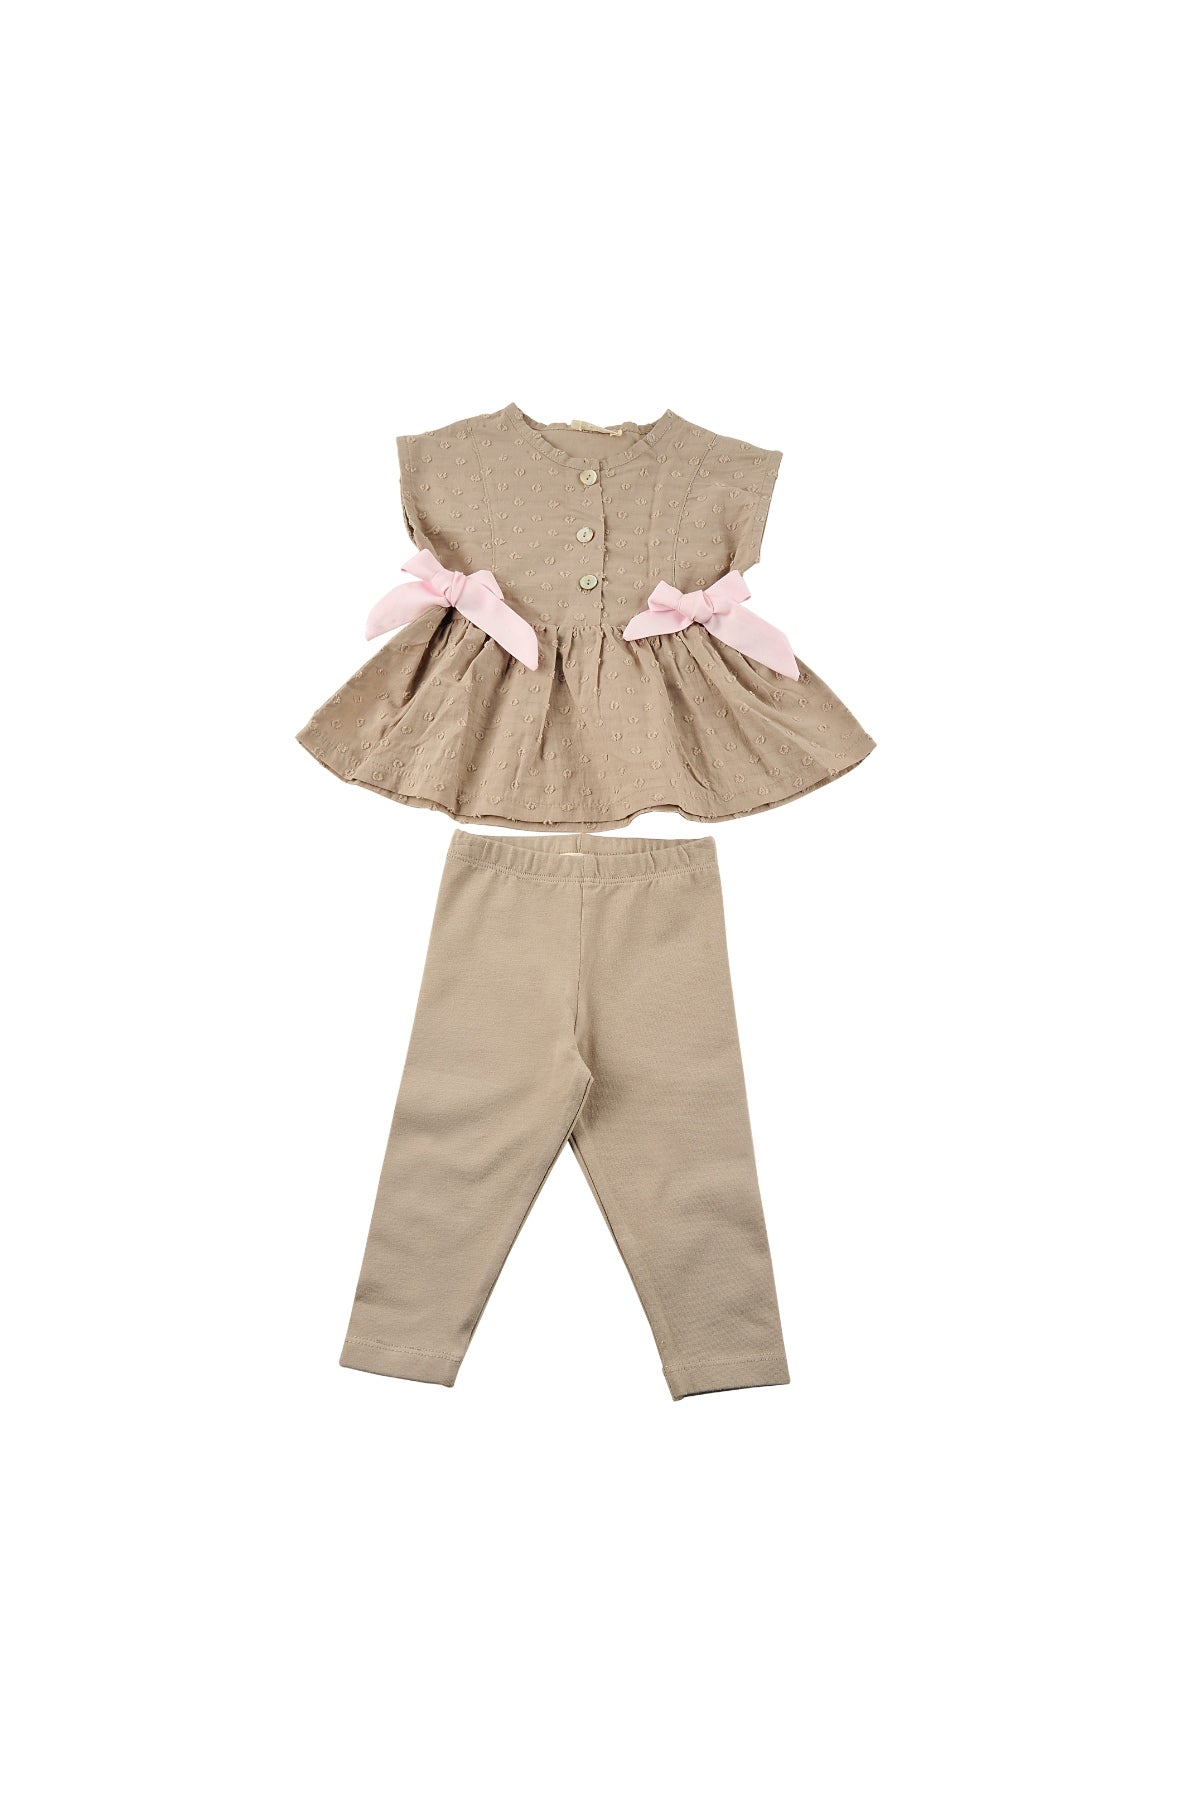 Kız Bebek Kahverengi Fisto Pembe Fiyonklu Bluz ve Tayt Takım (6ay-4yaş)-2